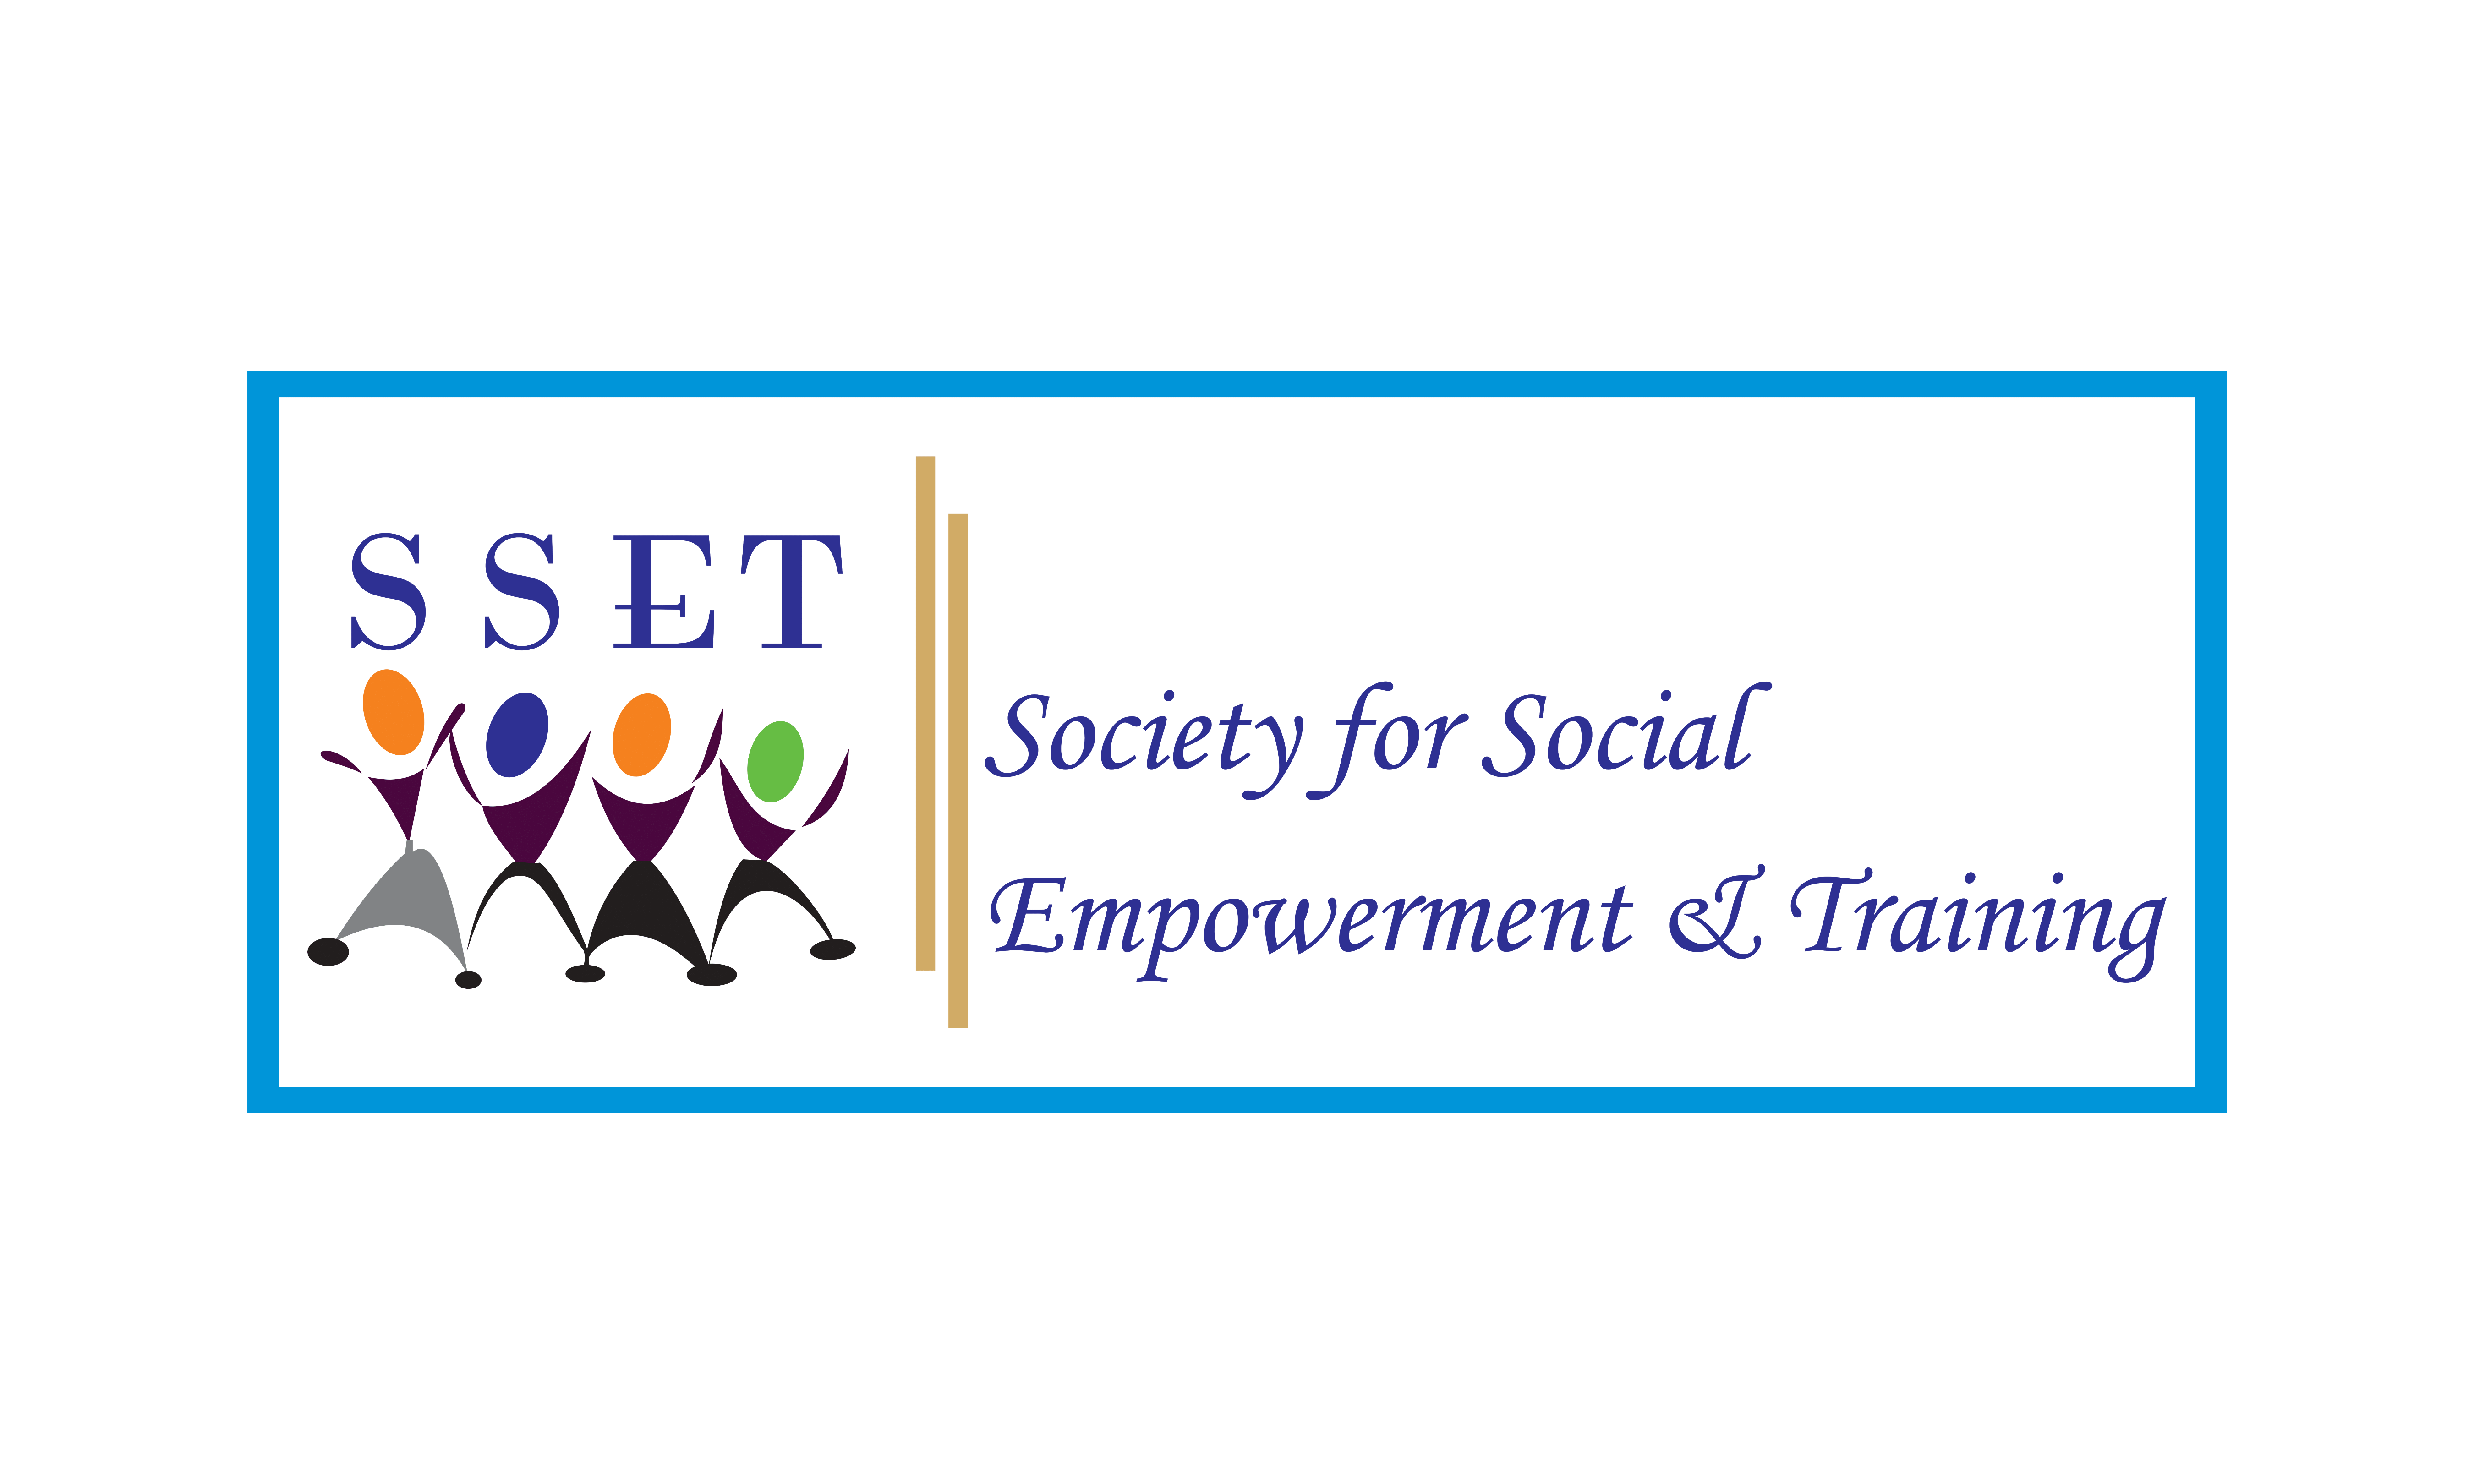 Society for Social Empowerment & Training